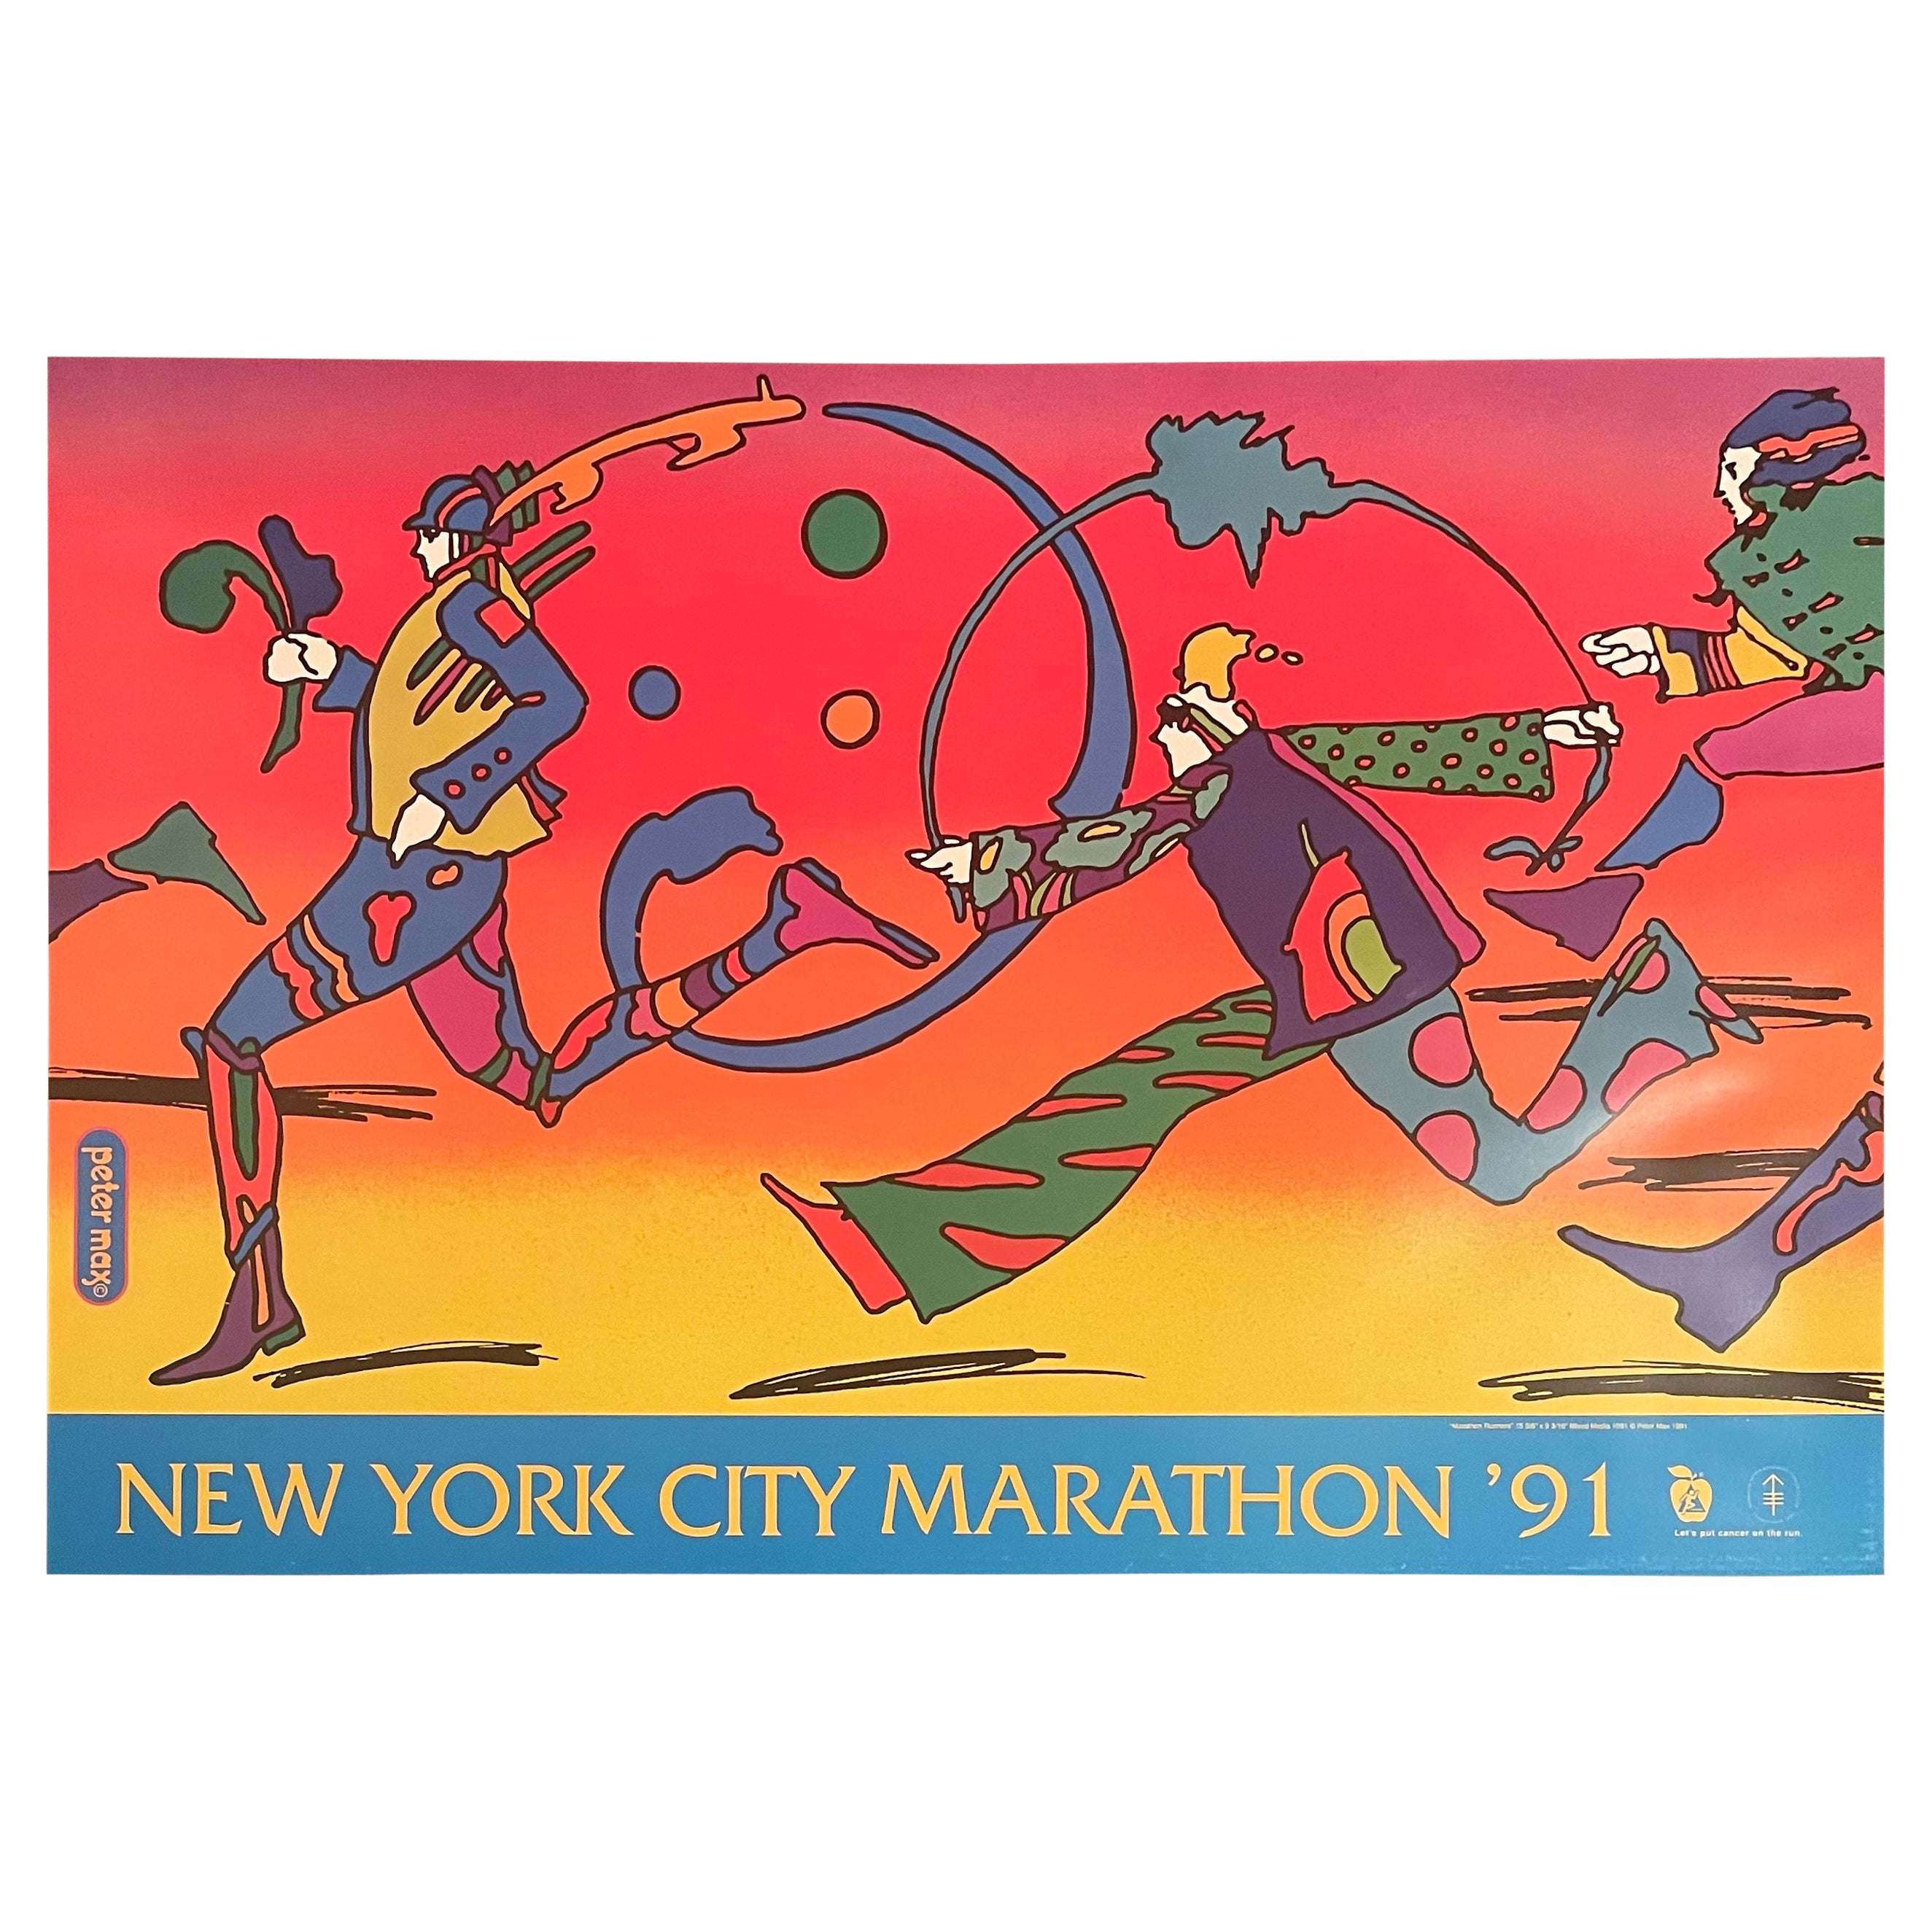 Vintage "New York City Marathon" Poster by Peter Max, 1991